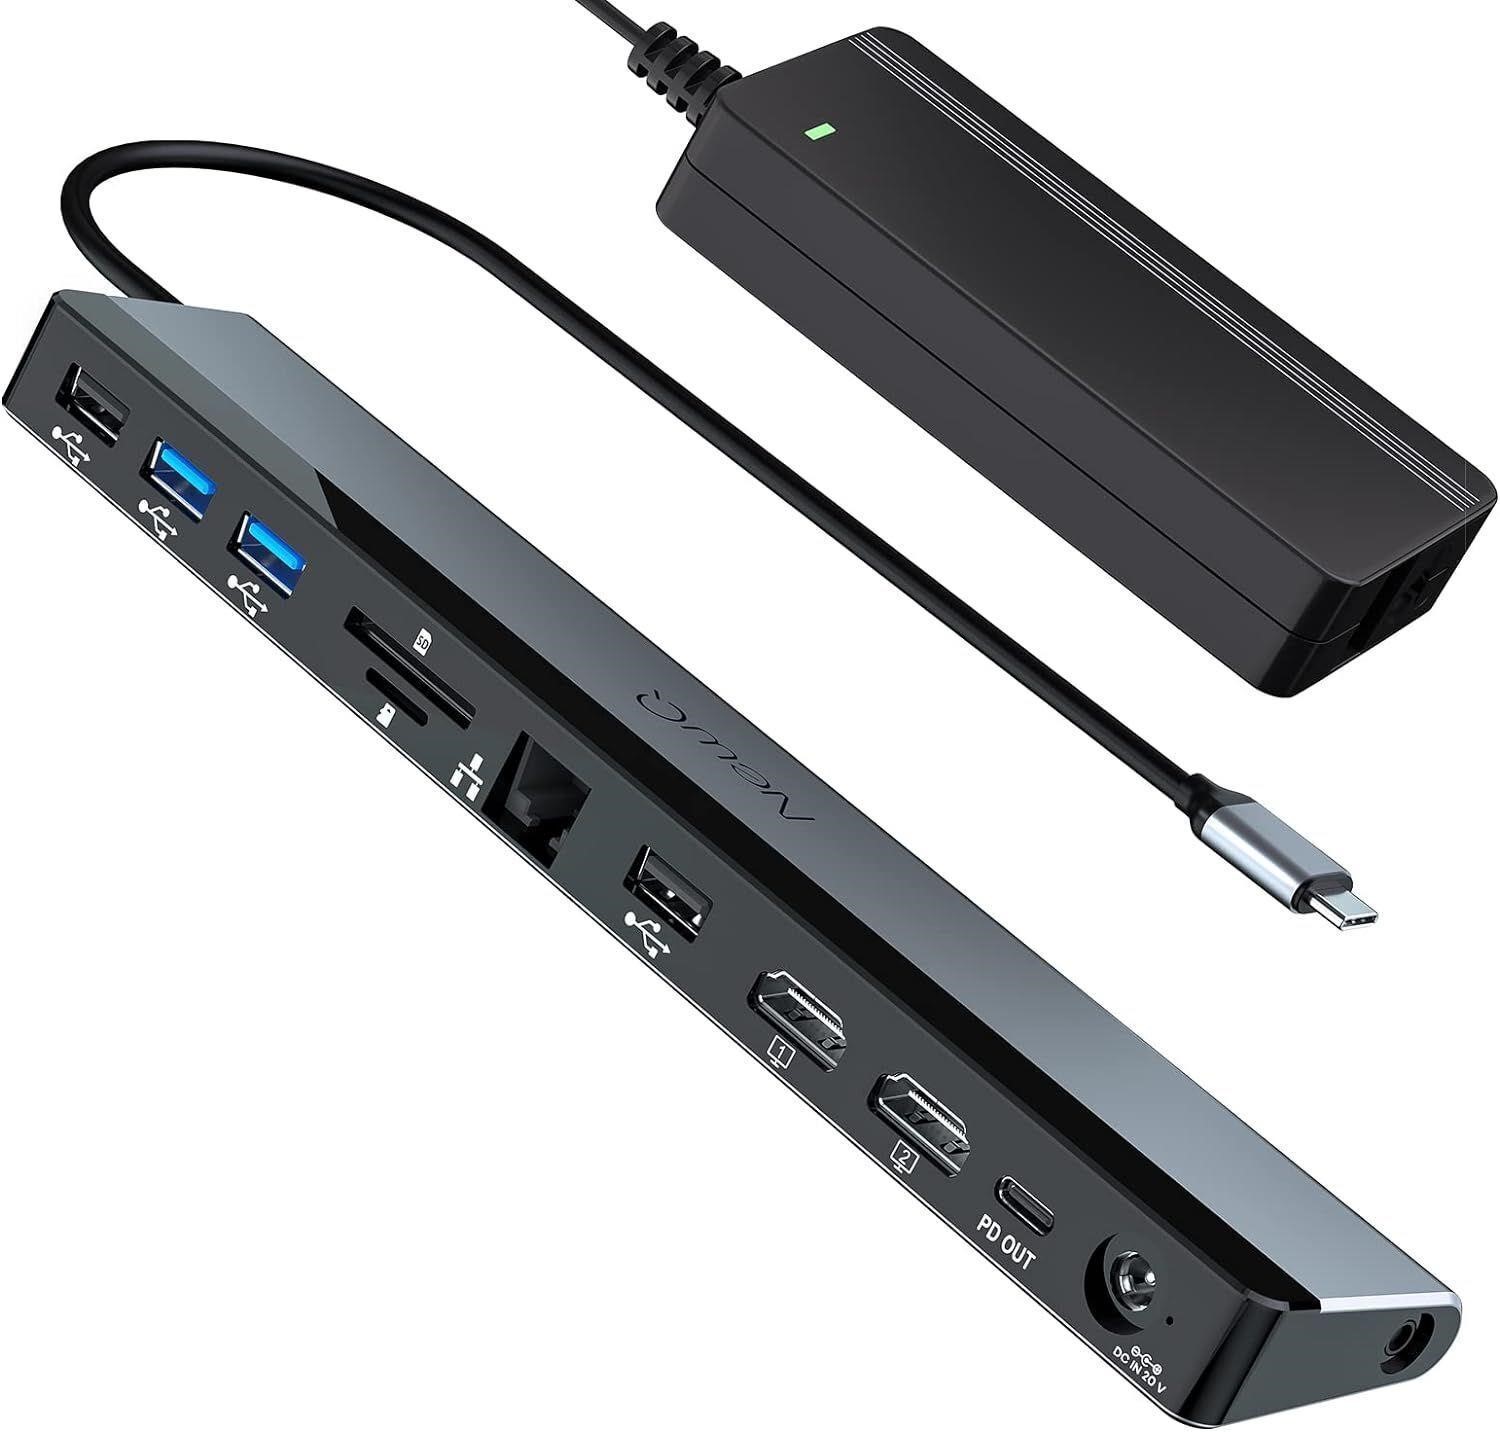 New $259--12-in-1 USB C Docking Station